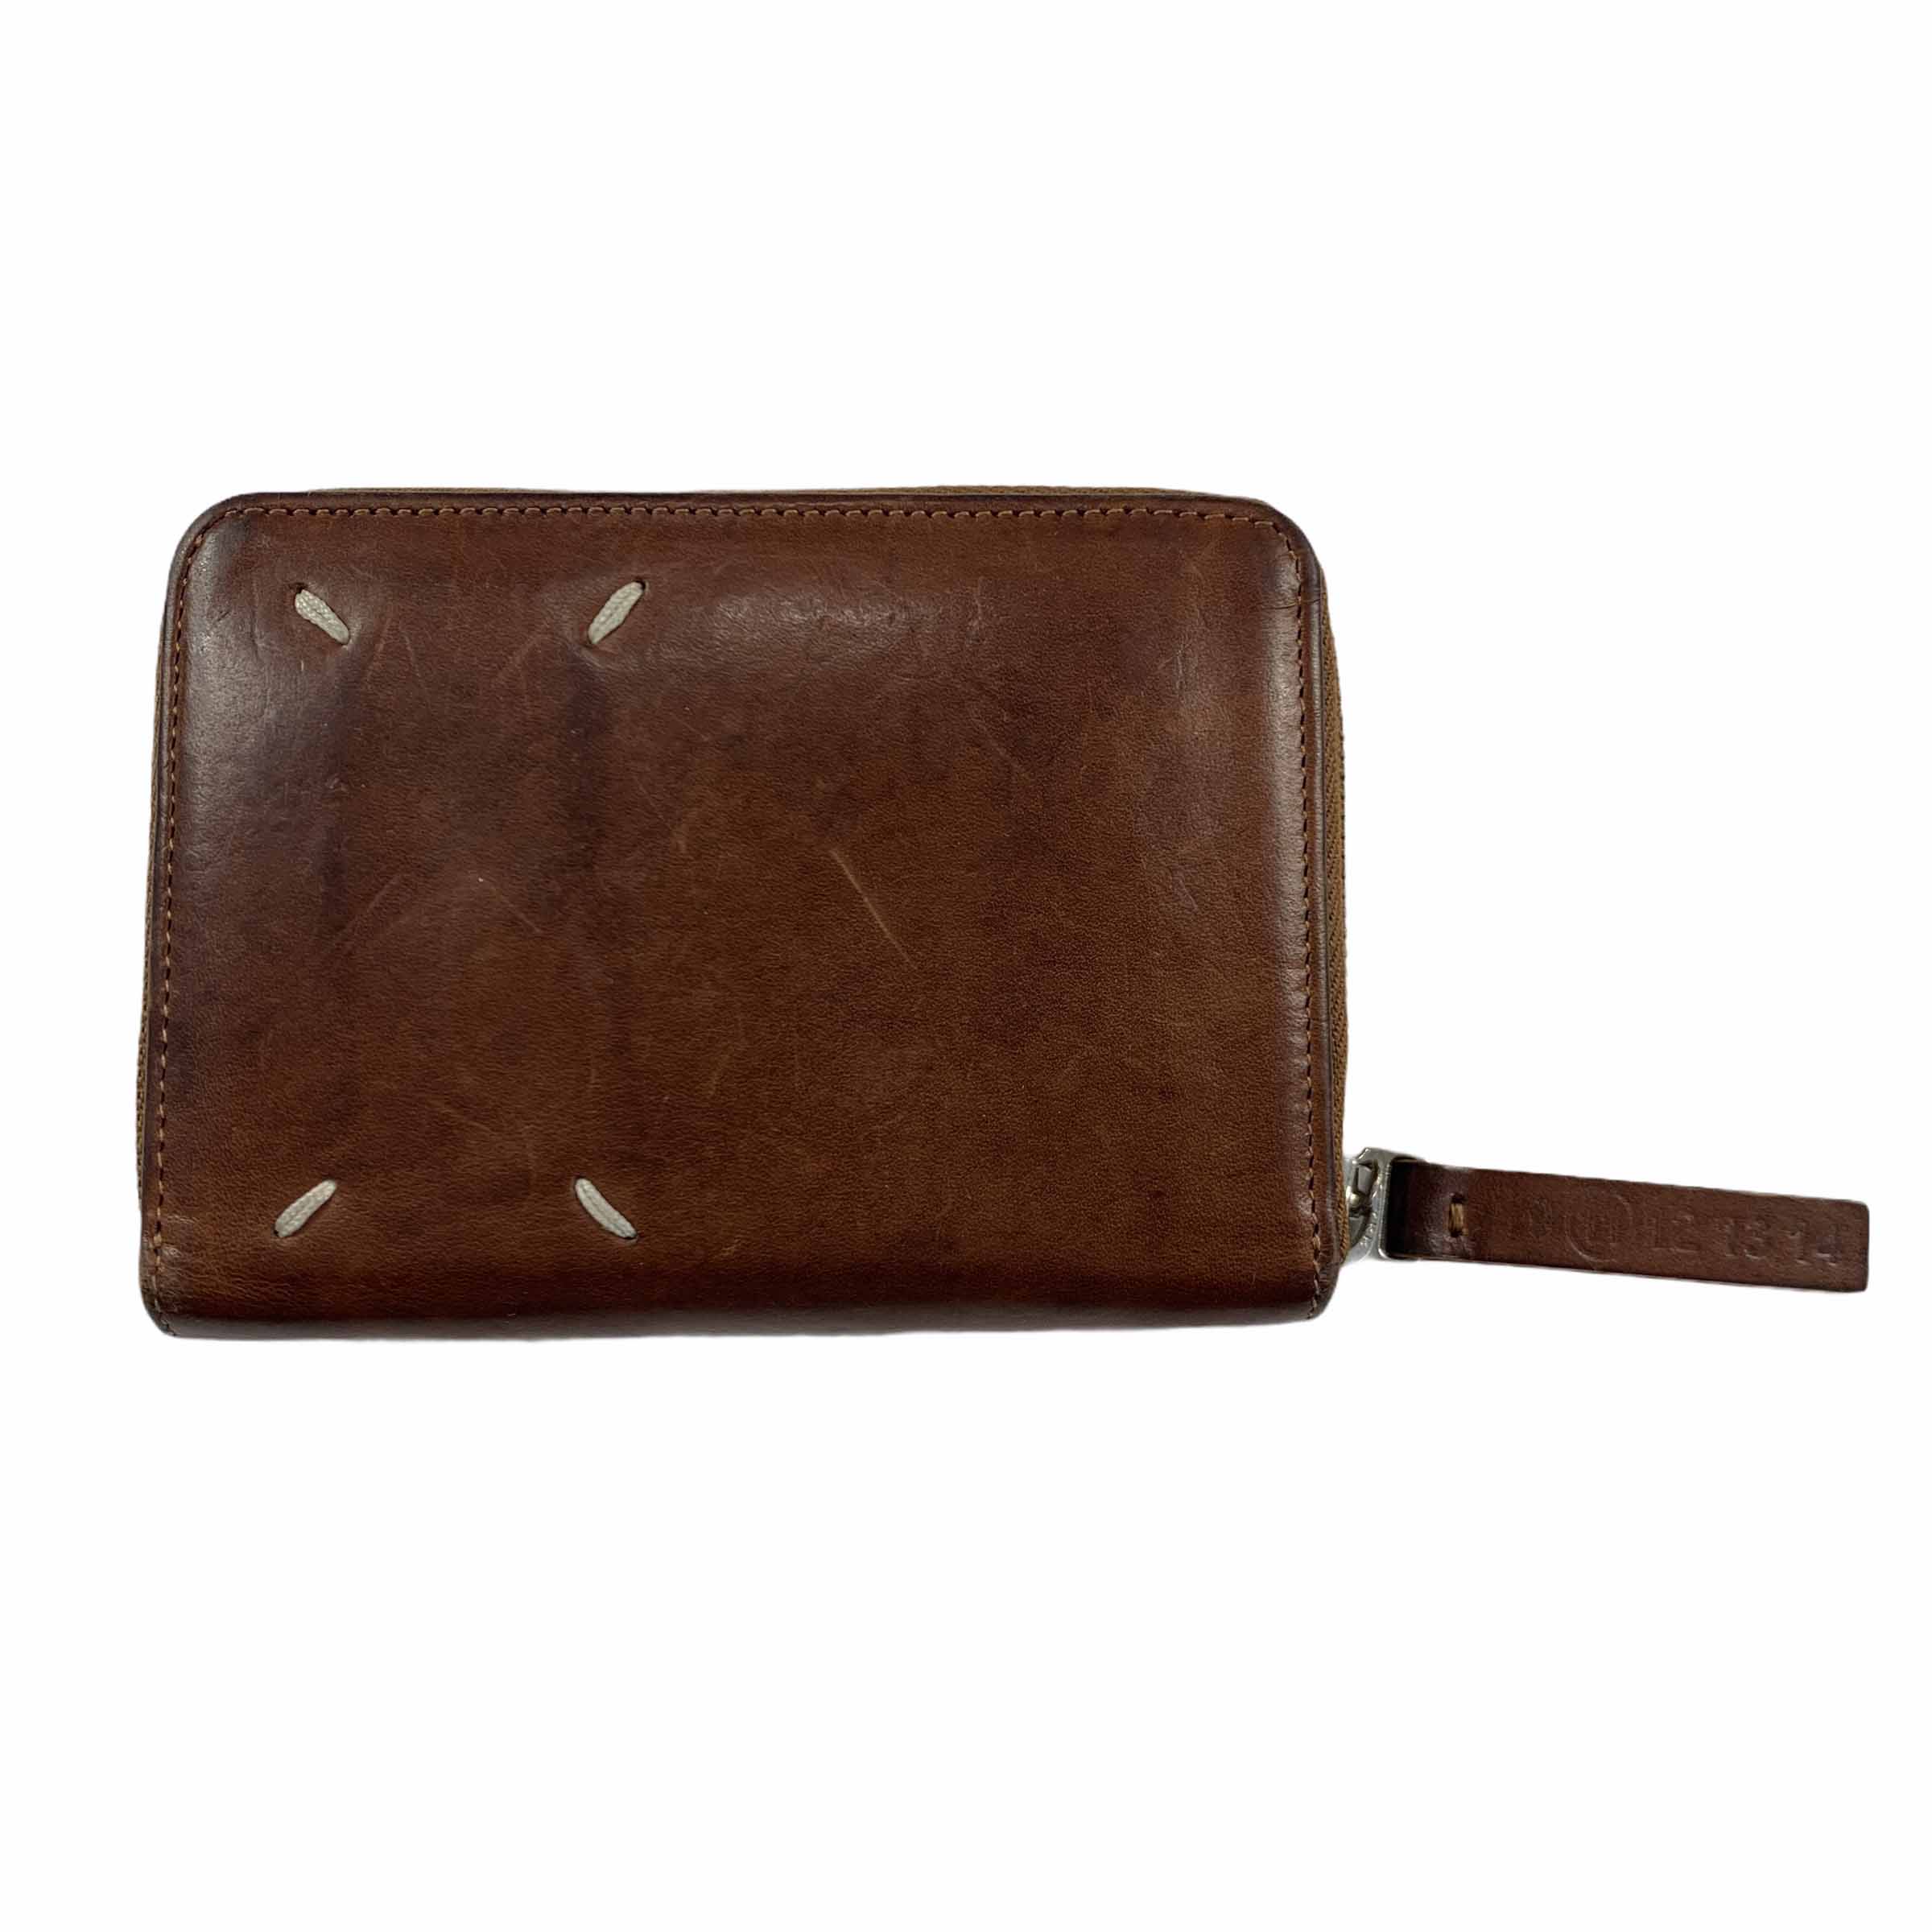 [Maison Margiela] Brown Stitch Wallet - Size OS